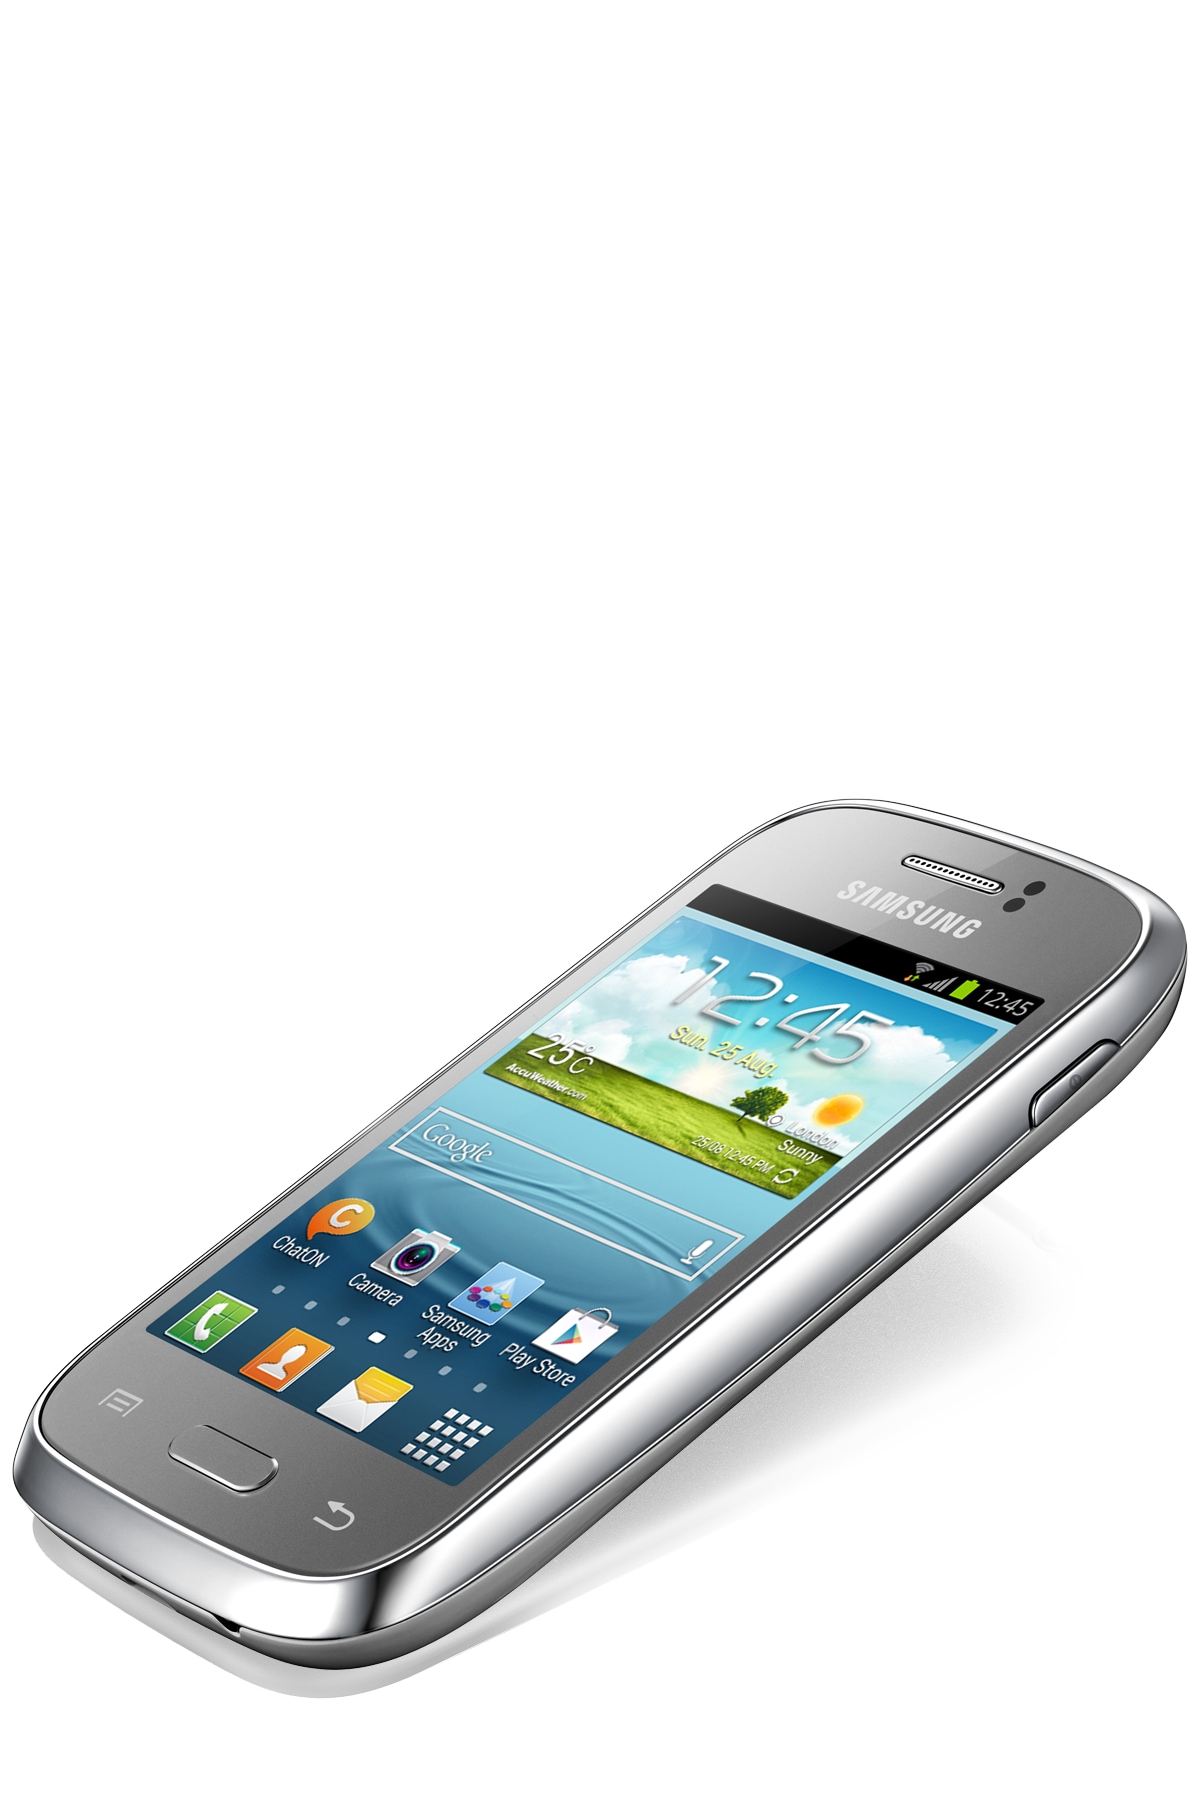 سعر ومواصفات موبايل سامسونج جلاكسي يونج Galaxy Young Duos S6312